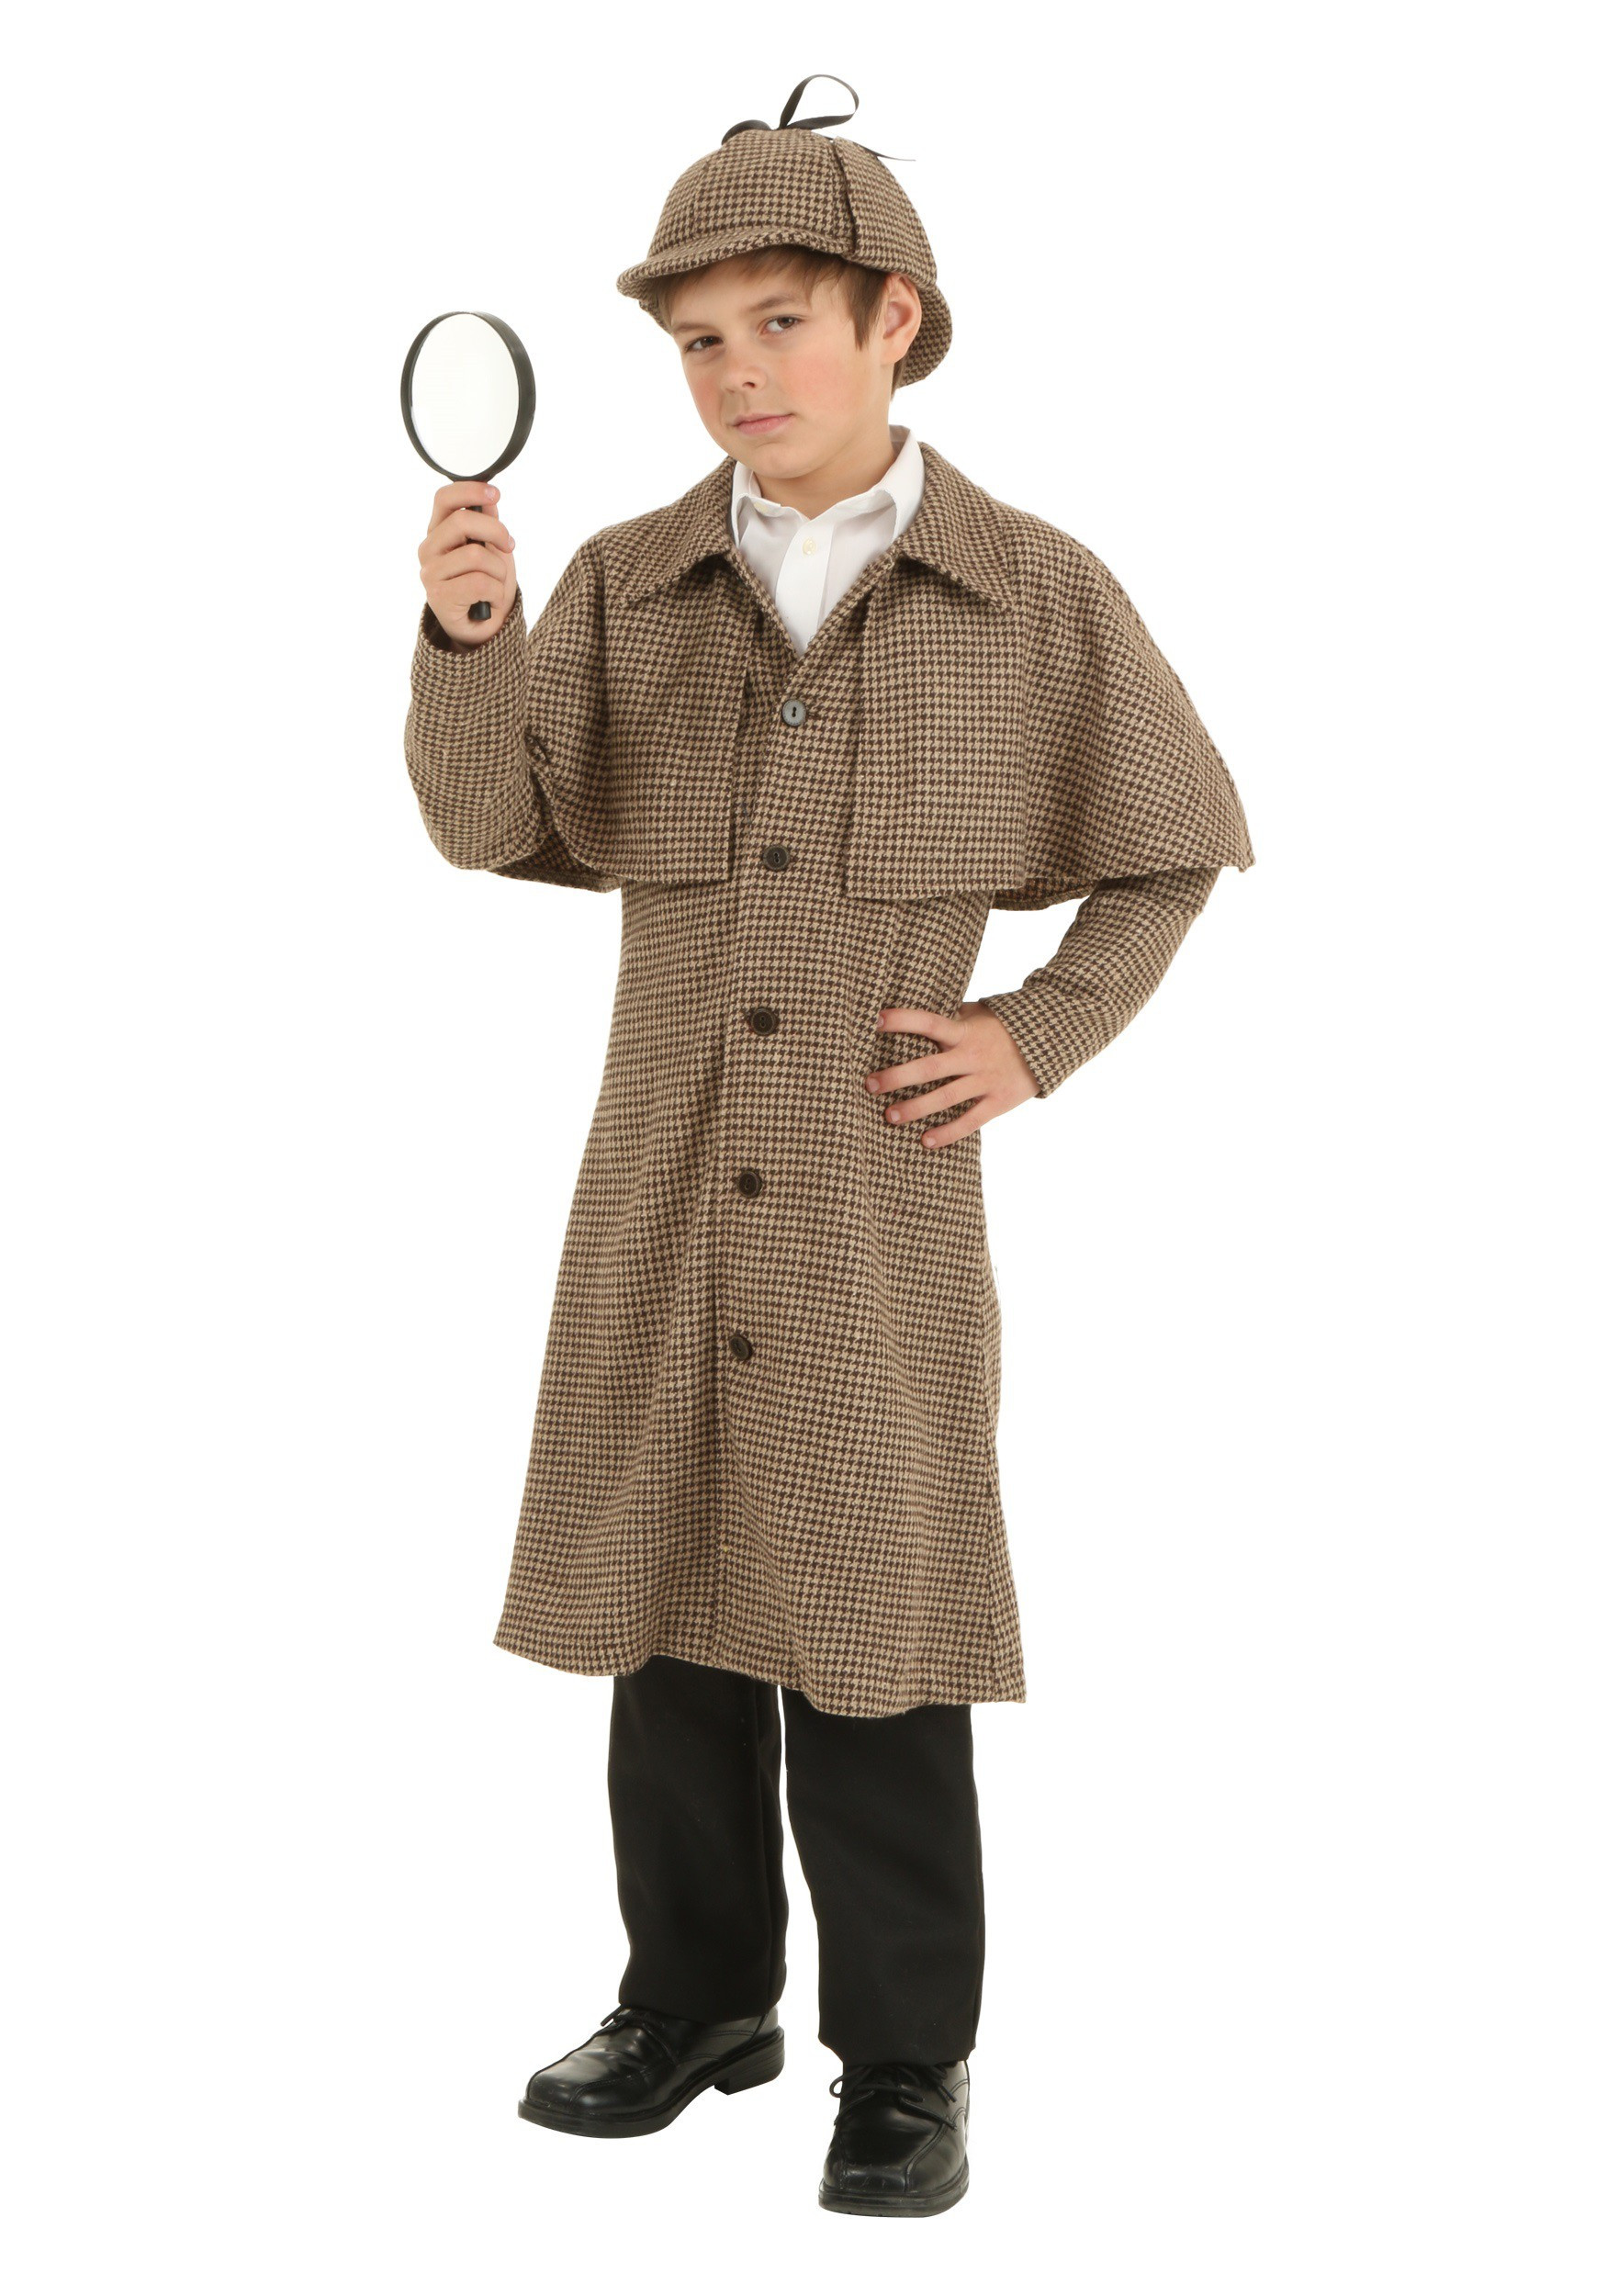 Best ideas about Sherlock Holmes Costume DIY
. Save or Pin Child Sherlock Holmes Costume Now.